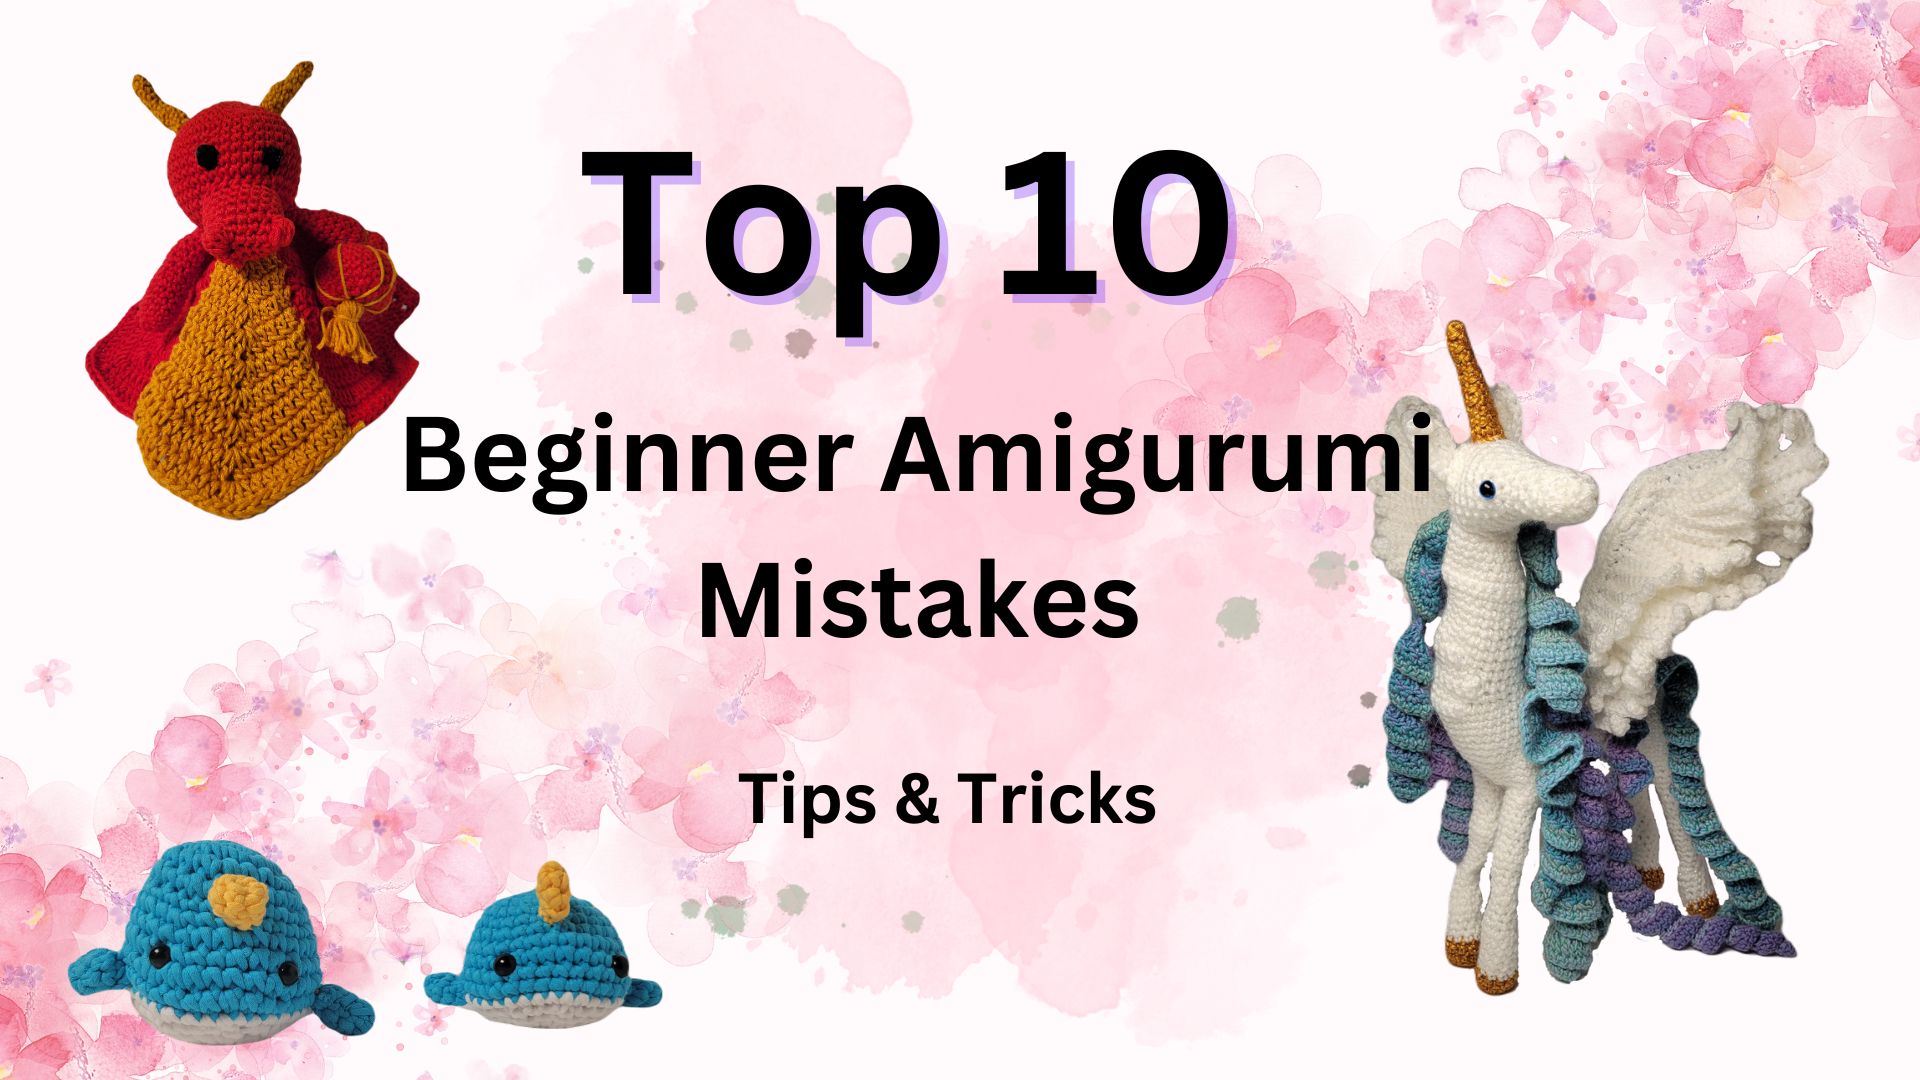 How to Avoid the Top 10 Beginner Amigurumi Crochet Mistakes